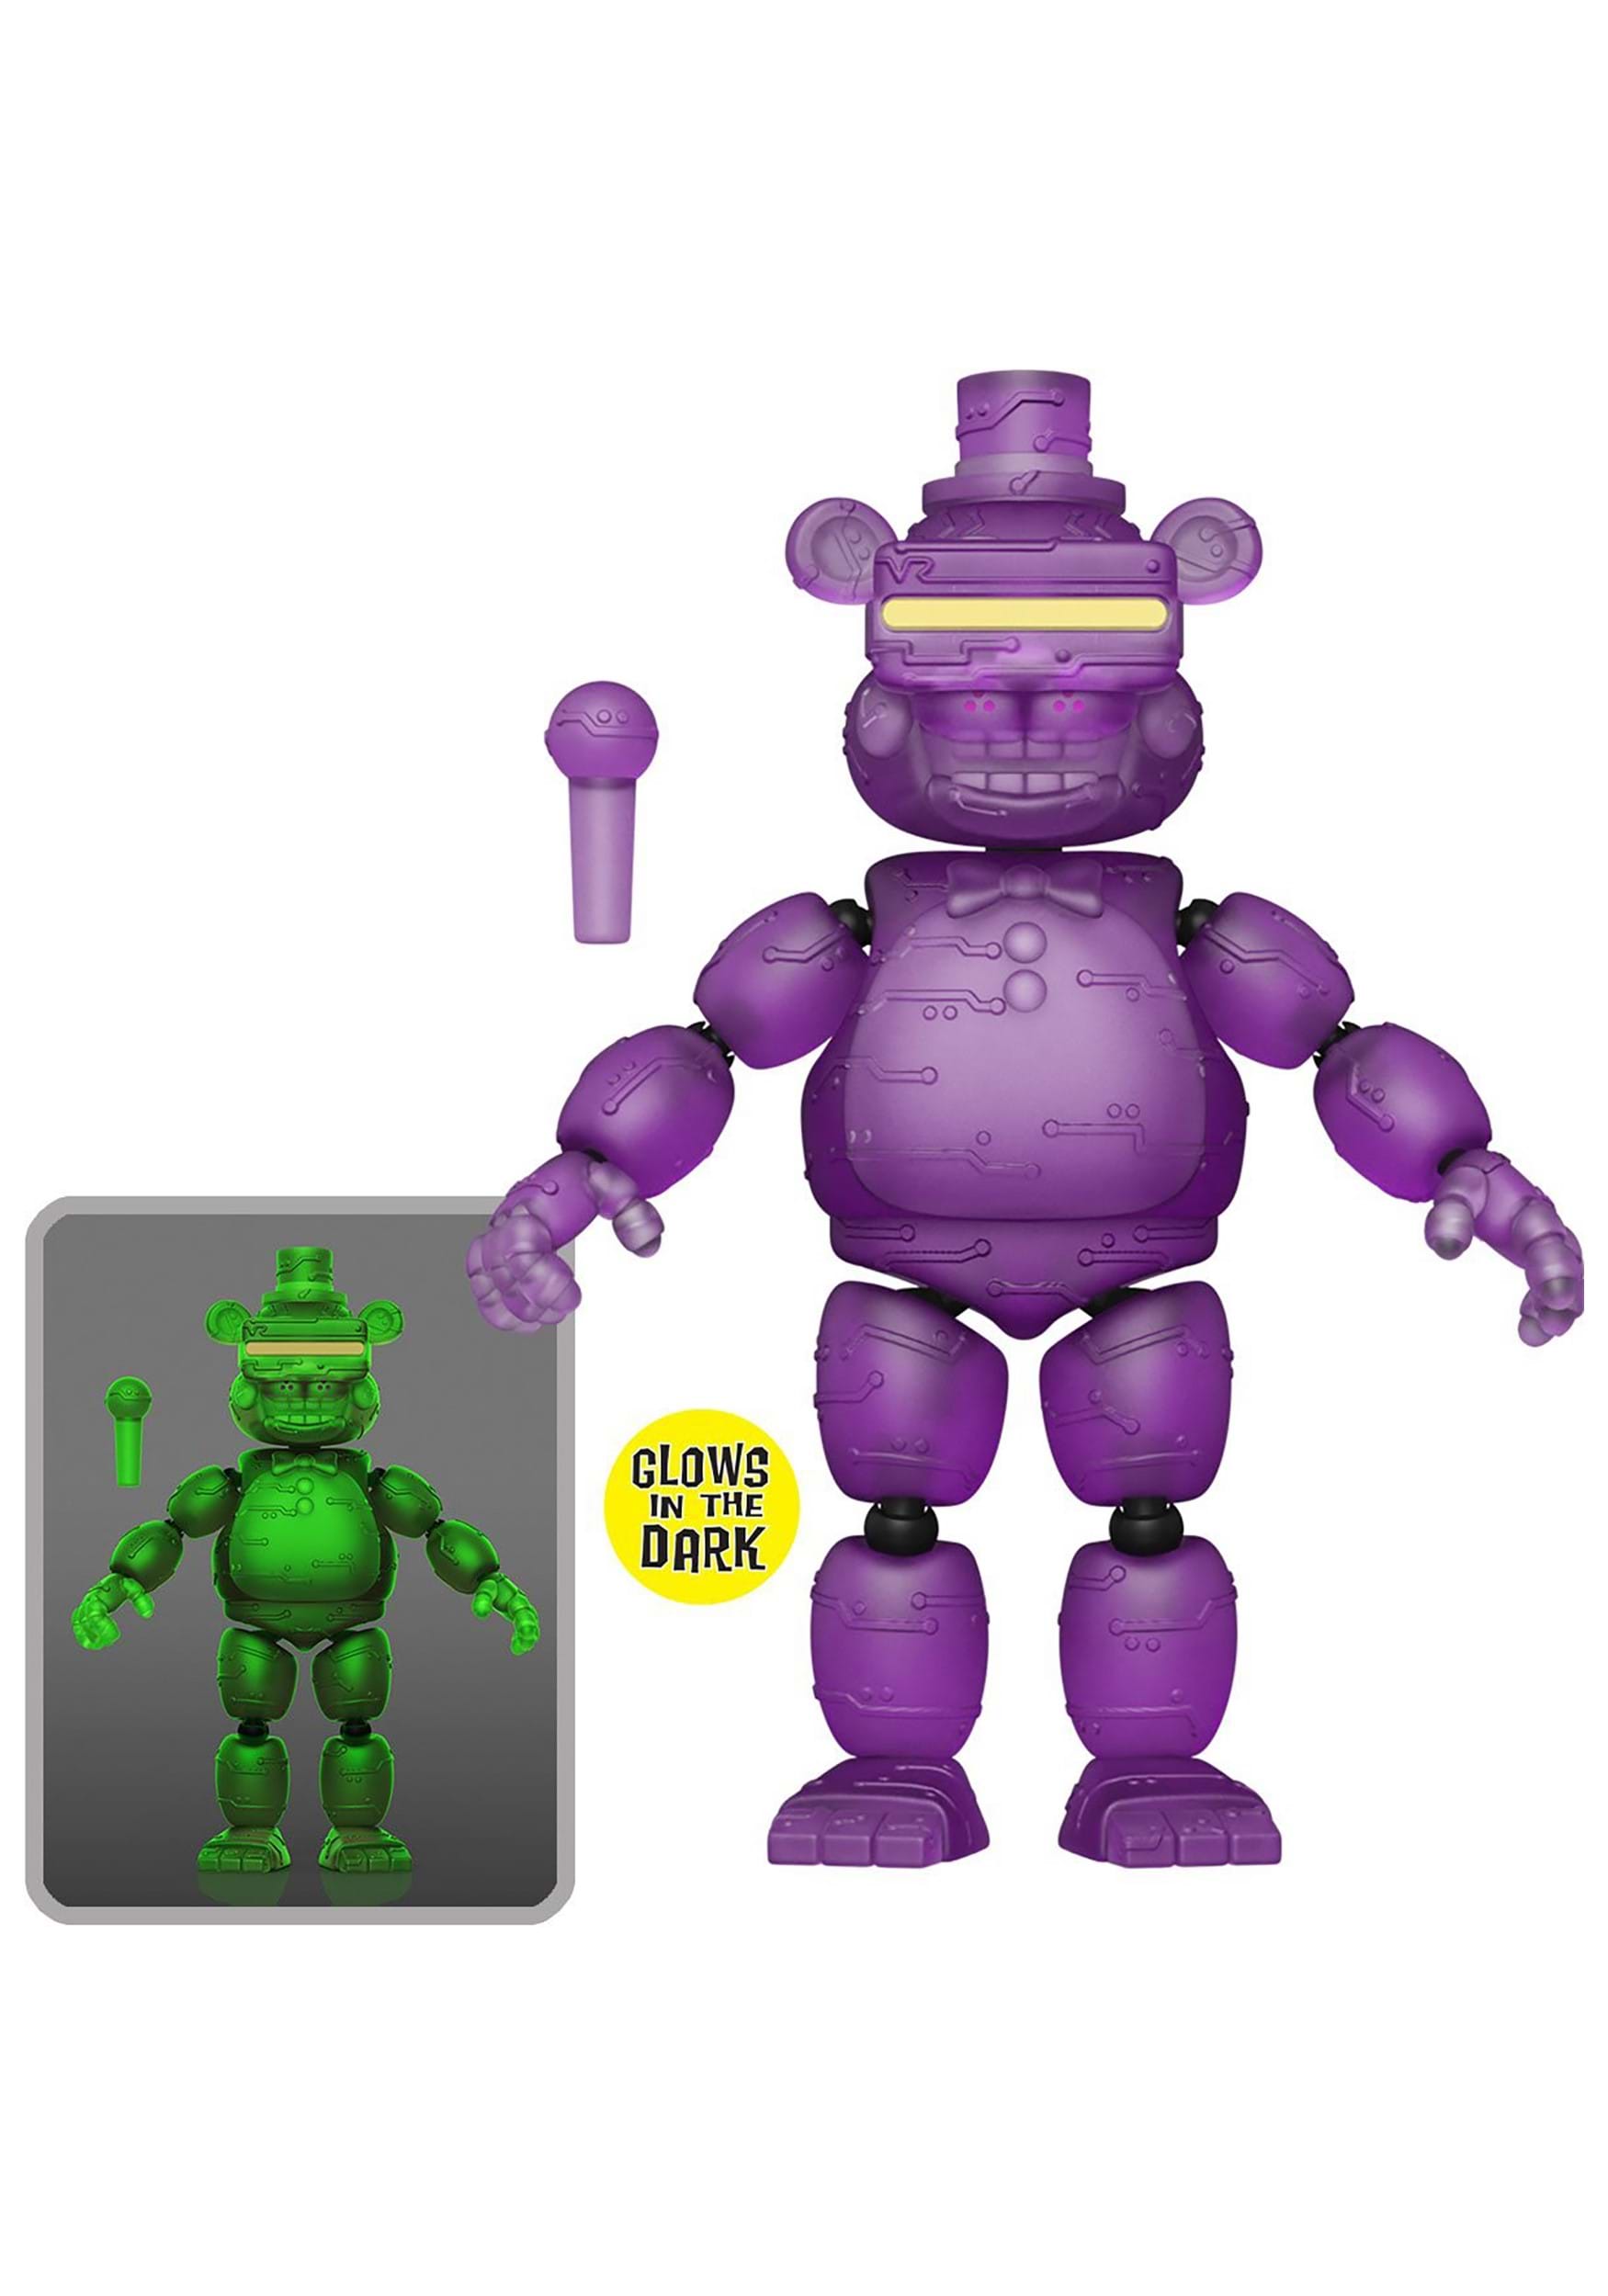 Freddy Media Blog on X: In FNaF 2, Purple Guy has a 1 in 100